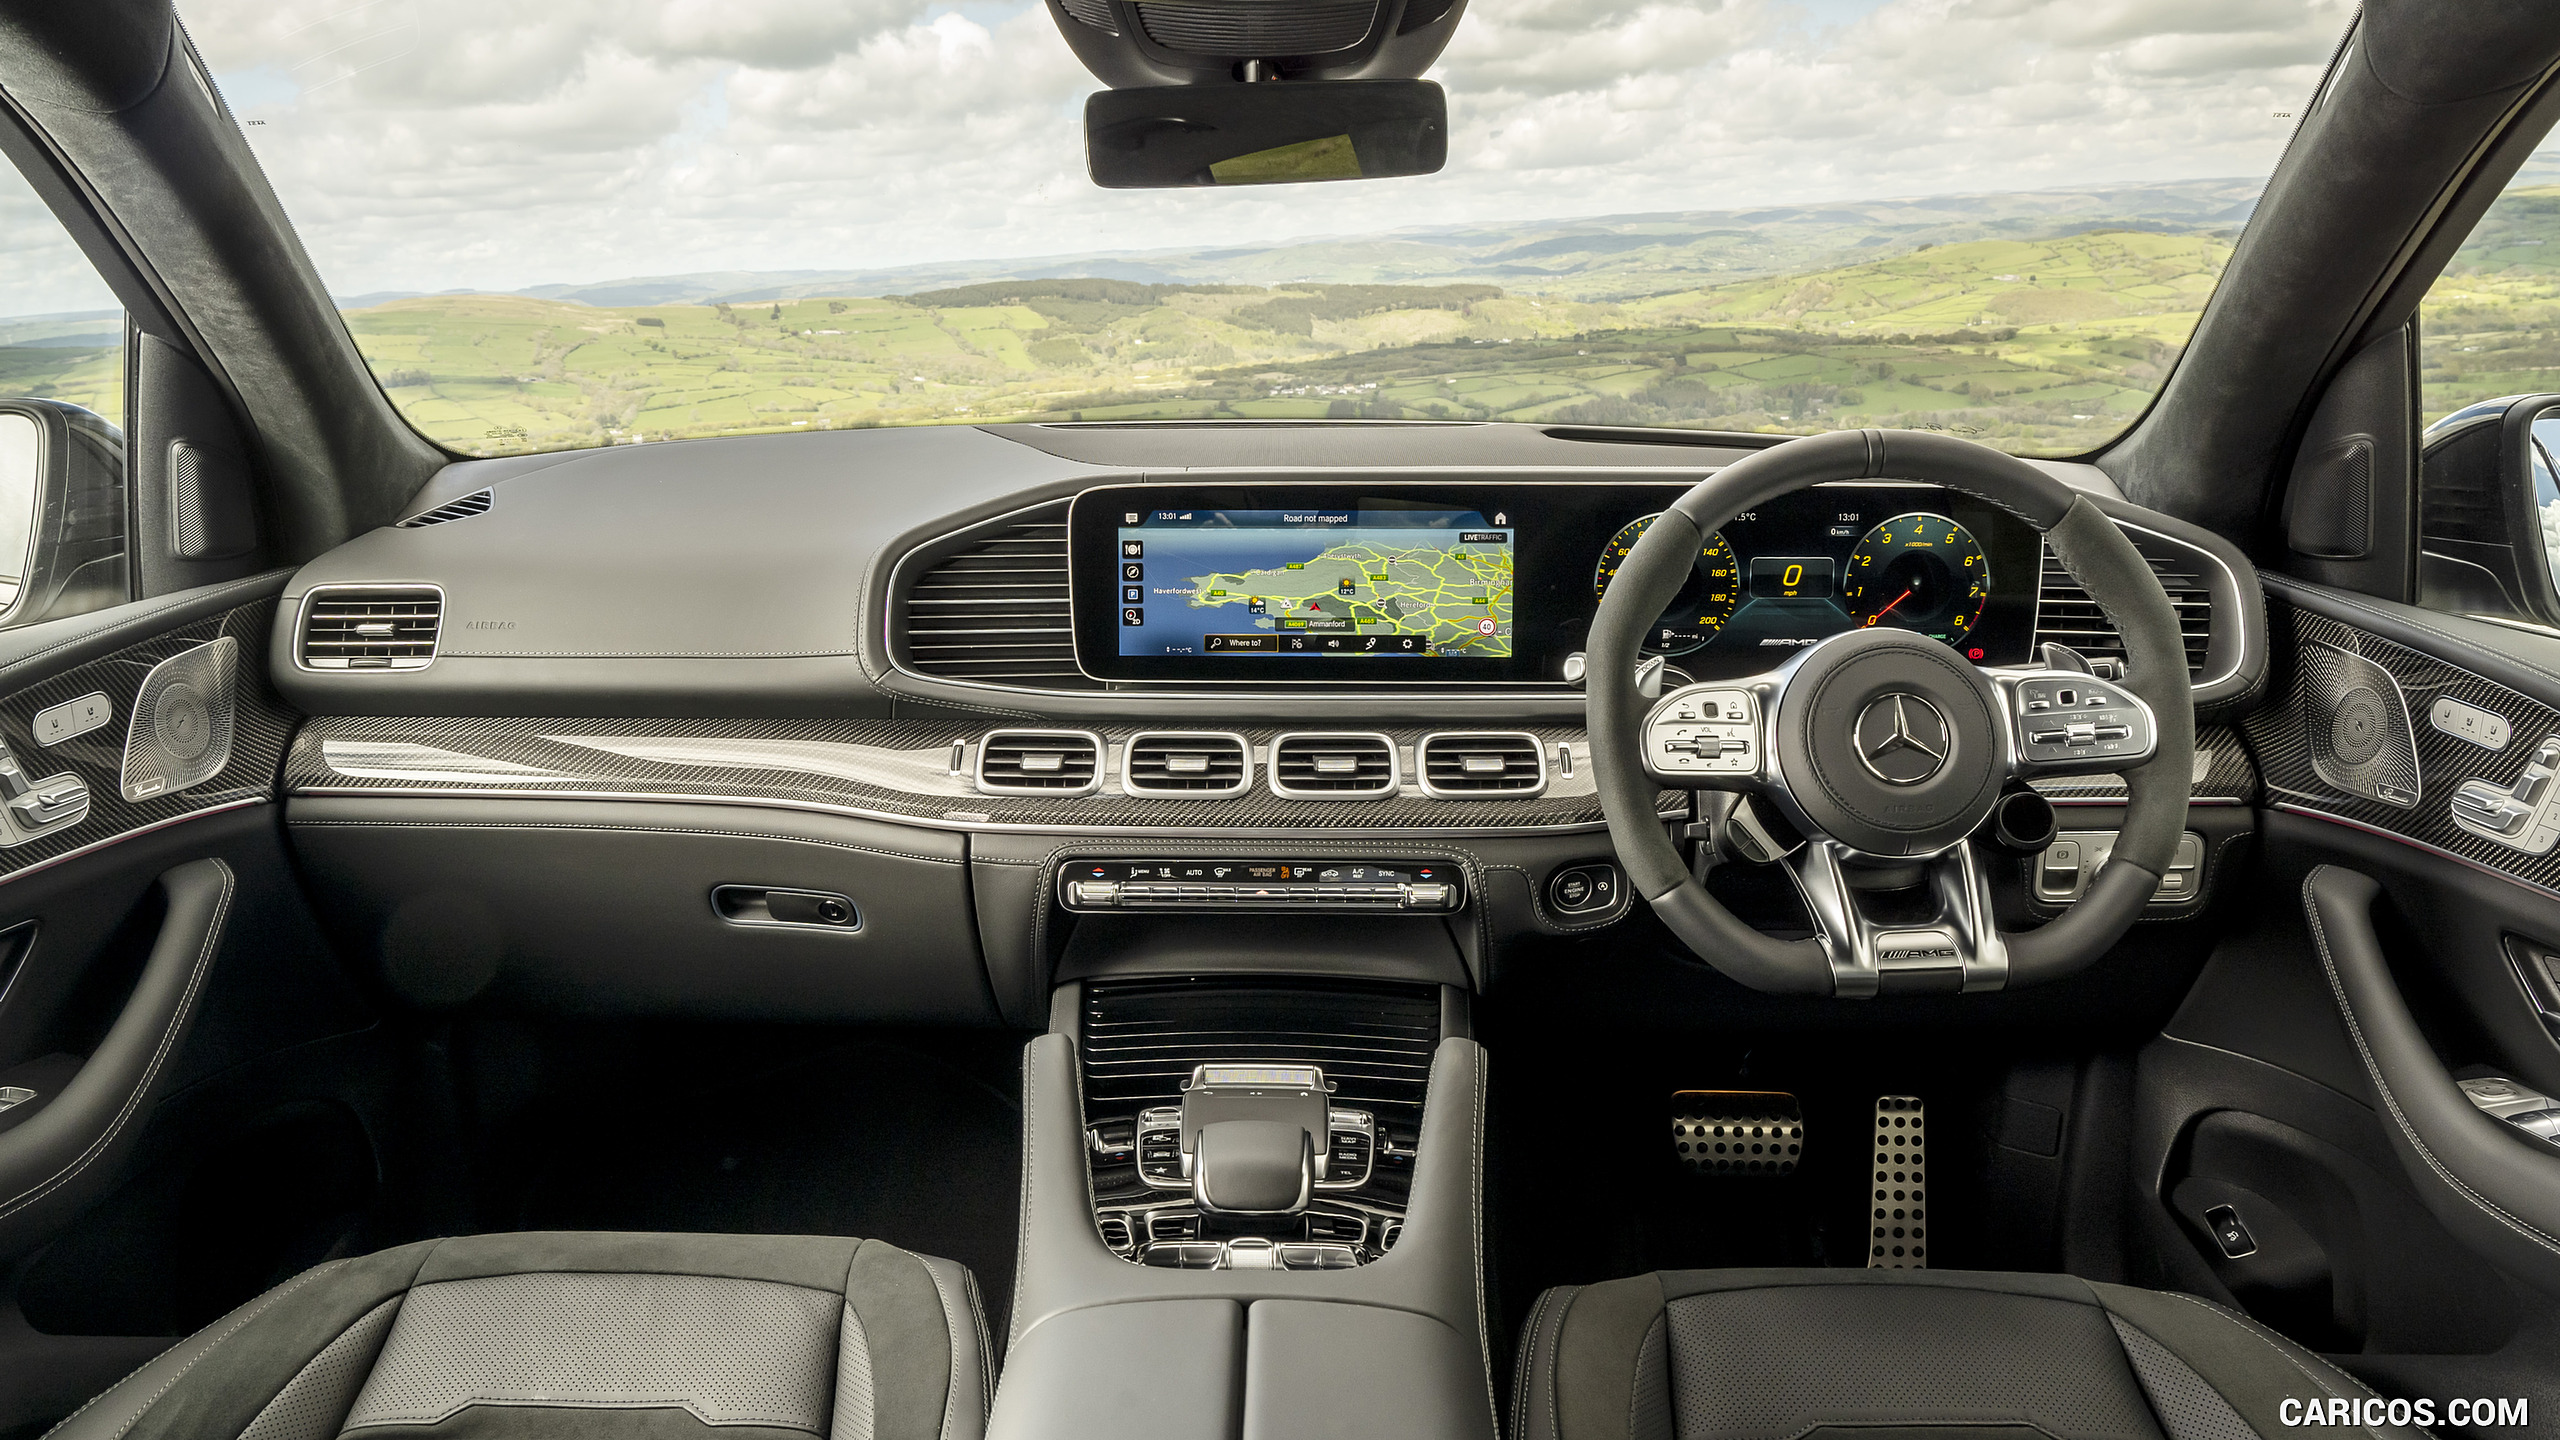 2021 Mercedes-AMG GLE 63 S 4MATIC (UK-Spec) - Interior, Cockpit, #163 of 187